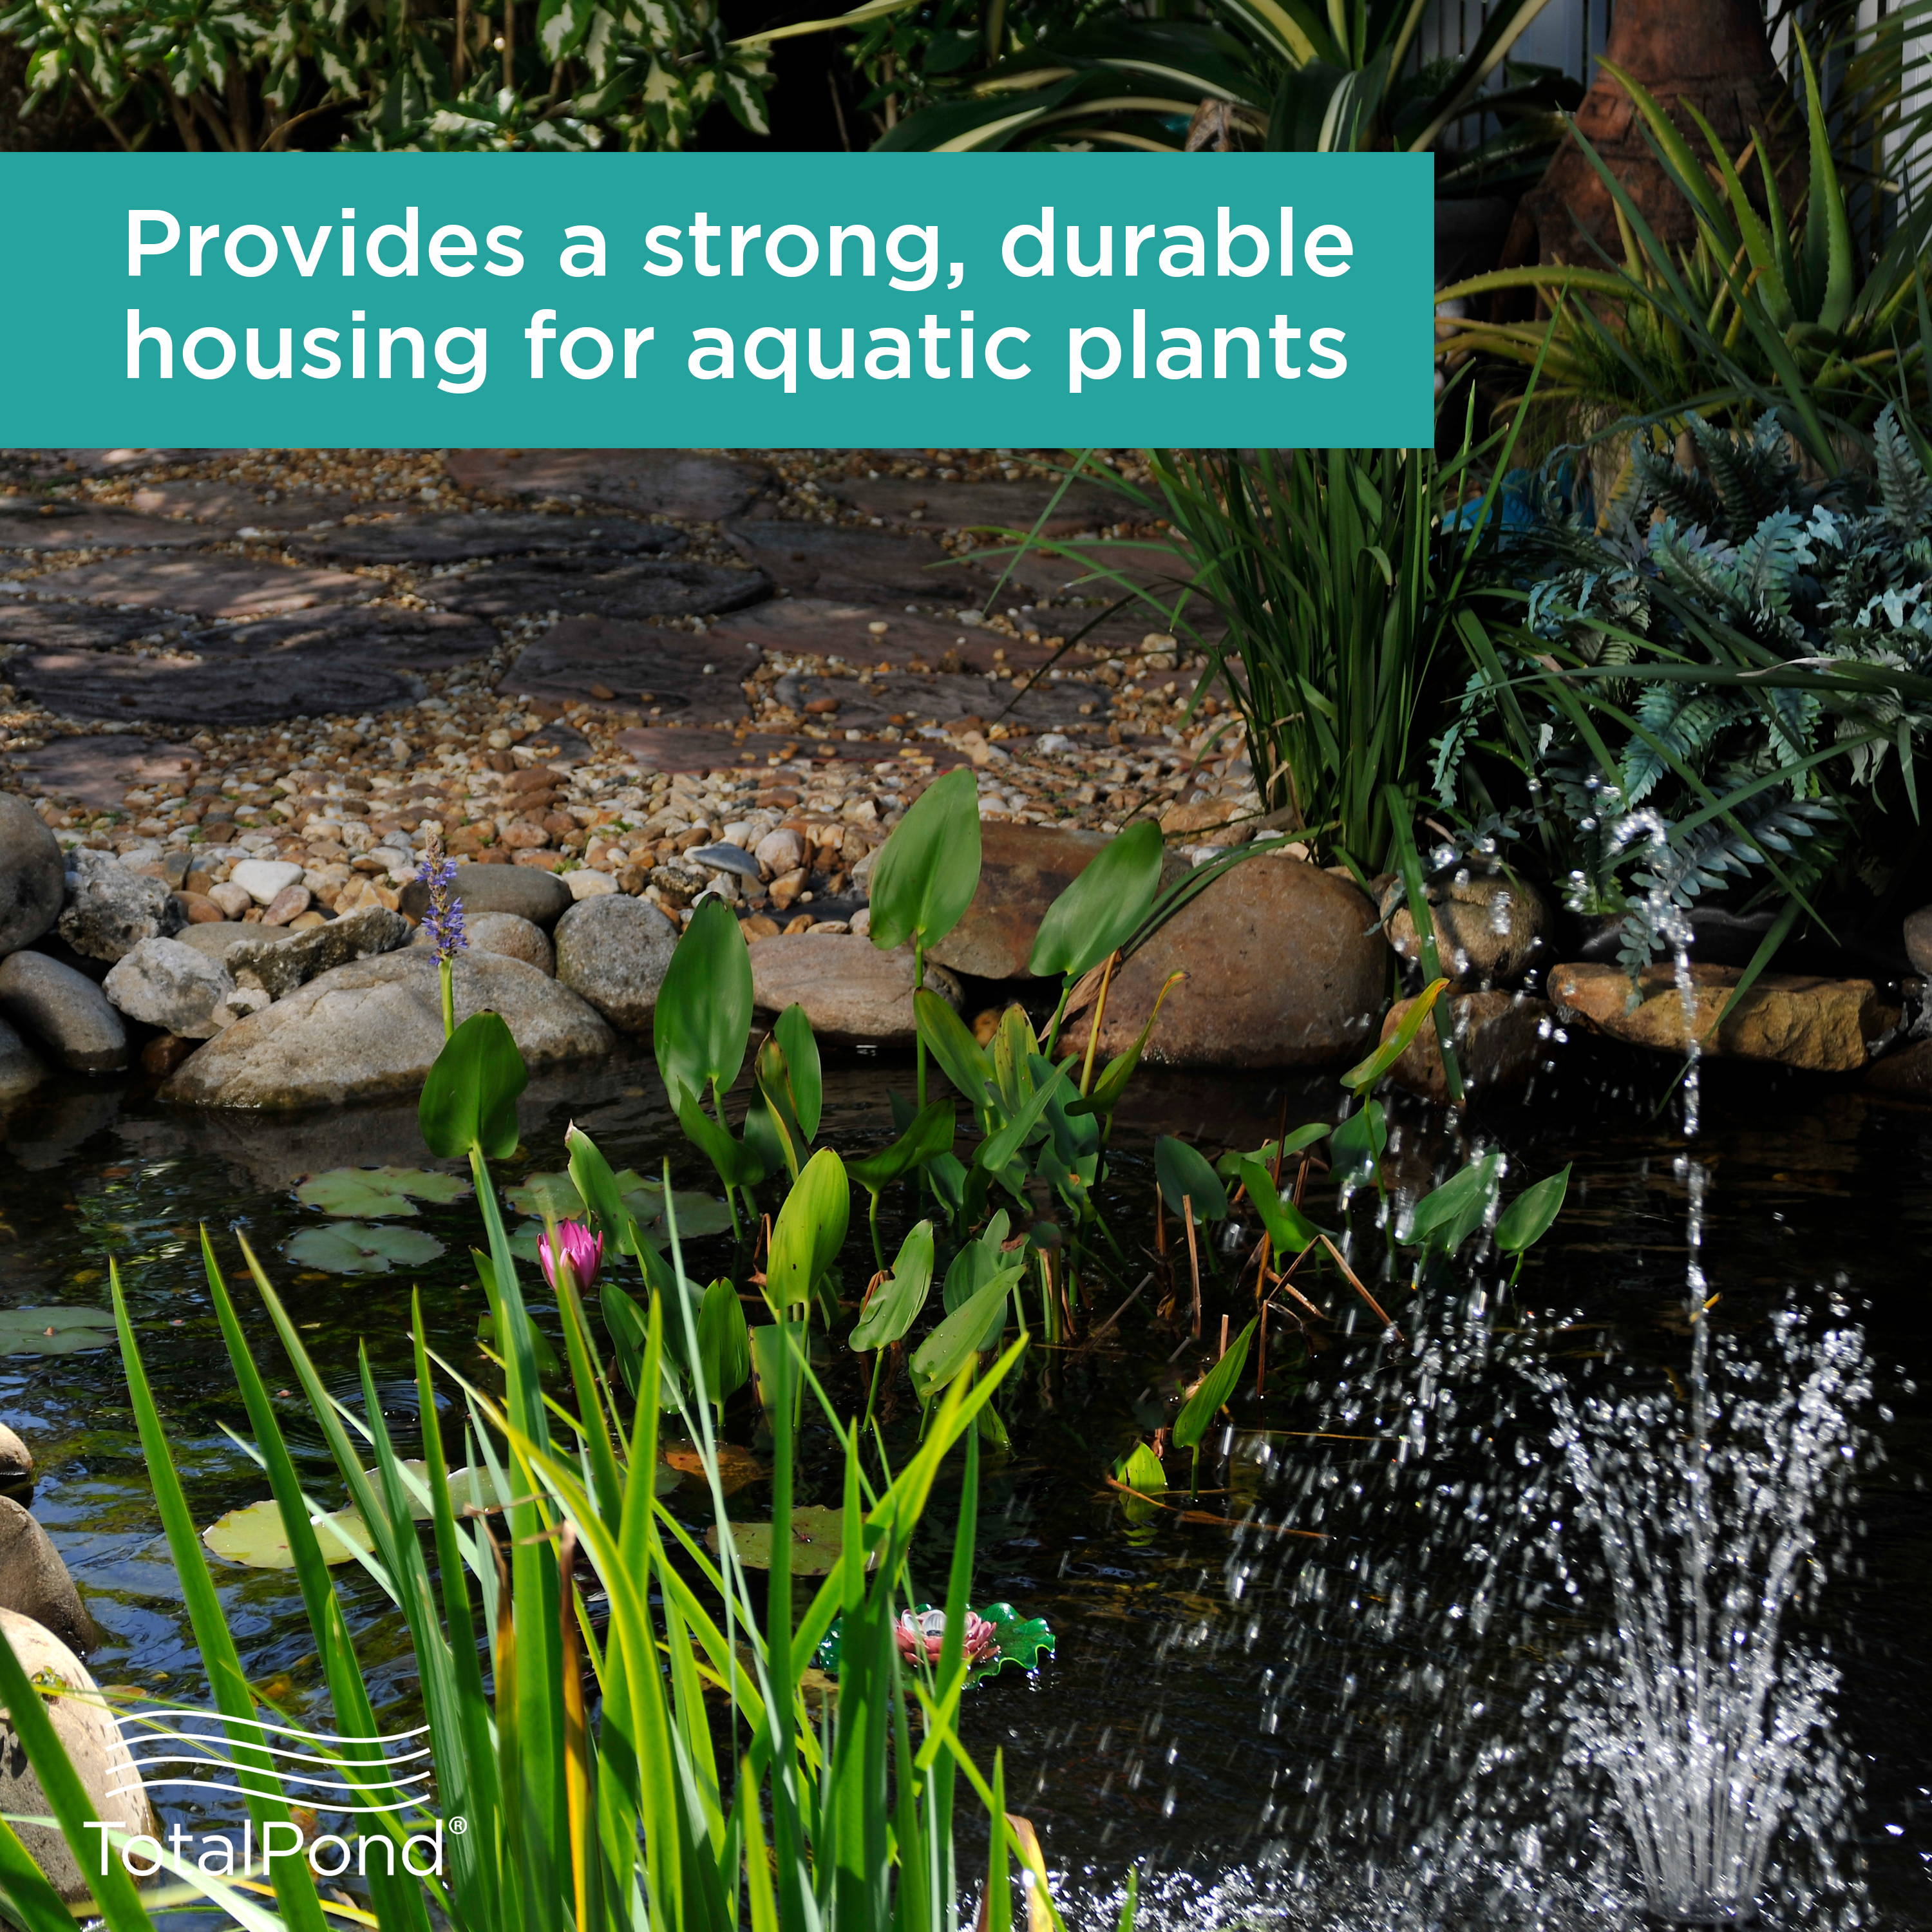 Basket provides housing for aquatic plants